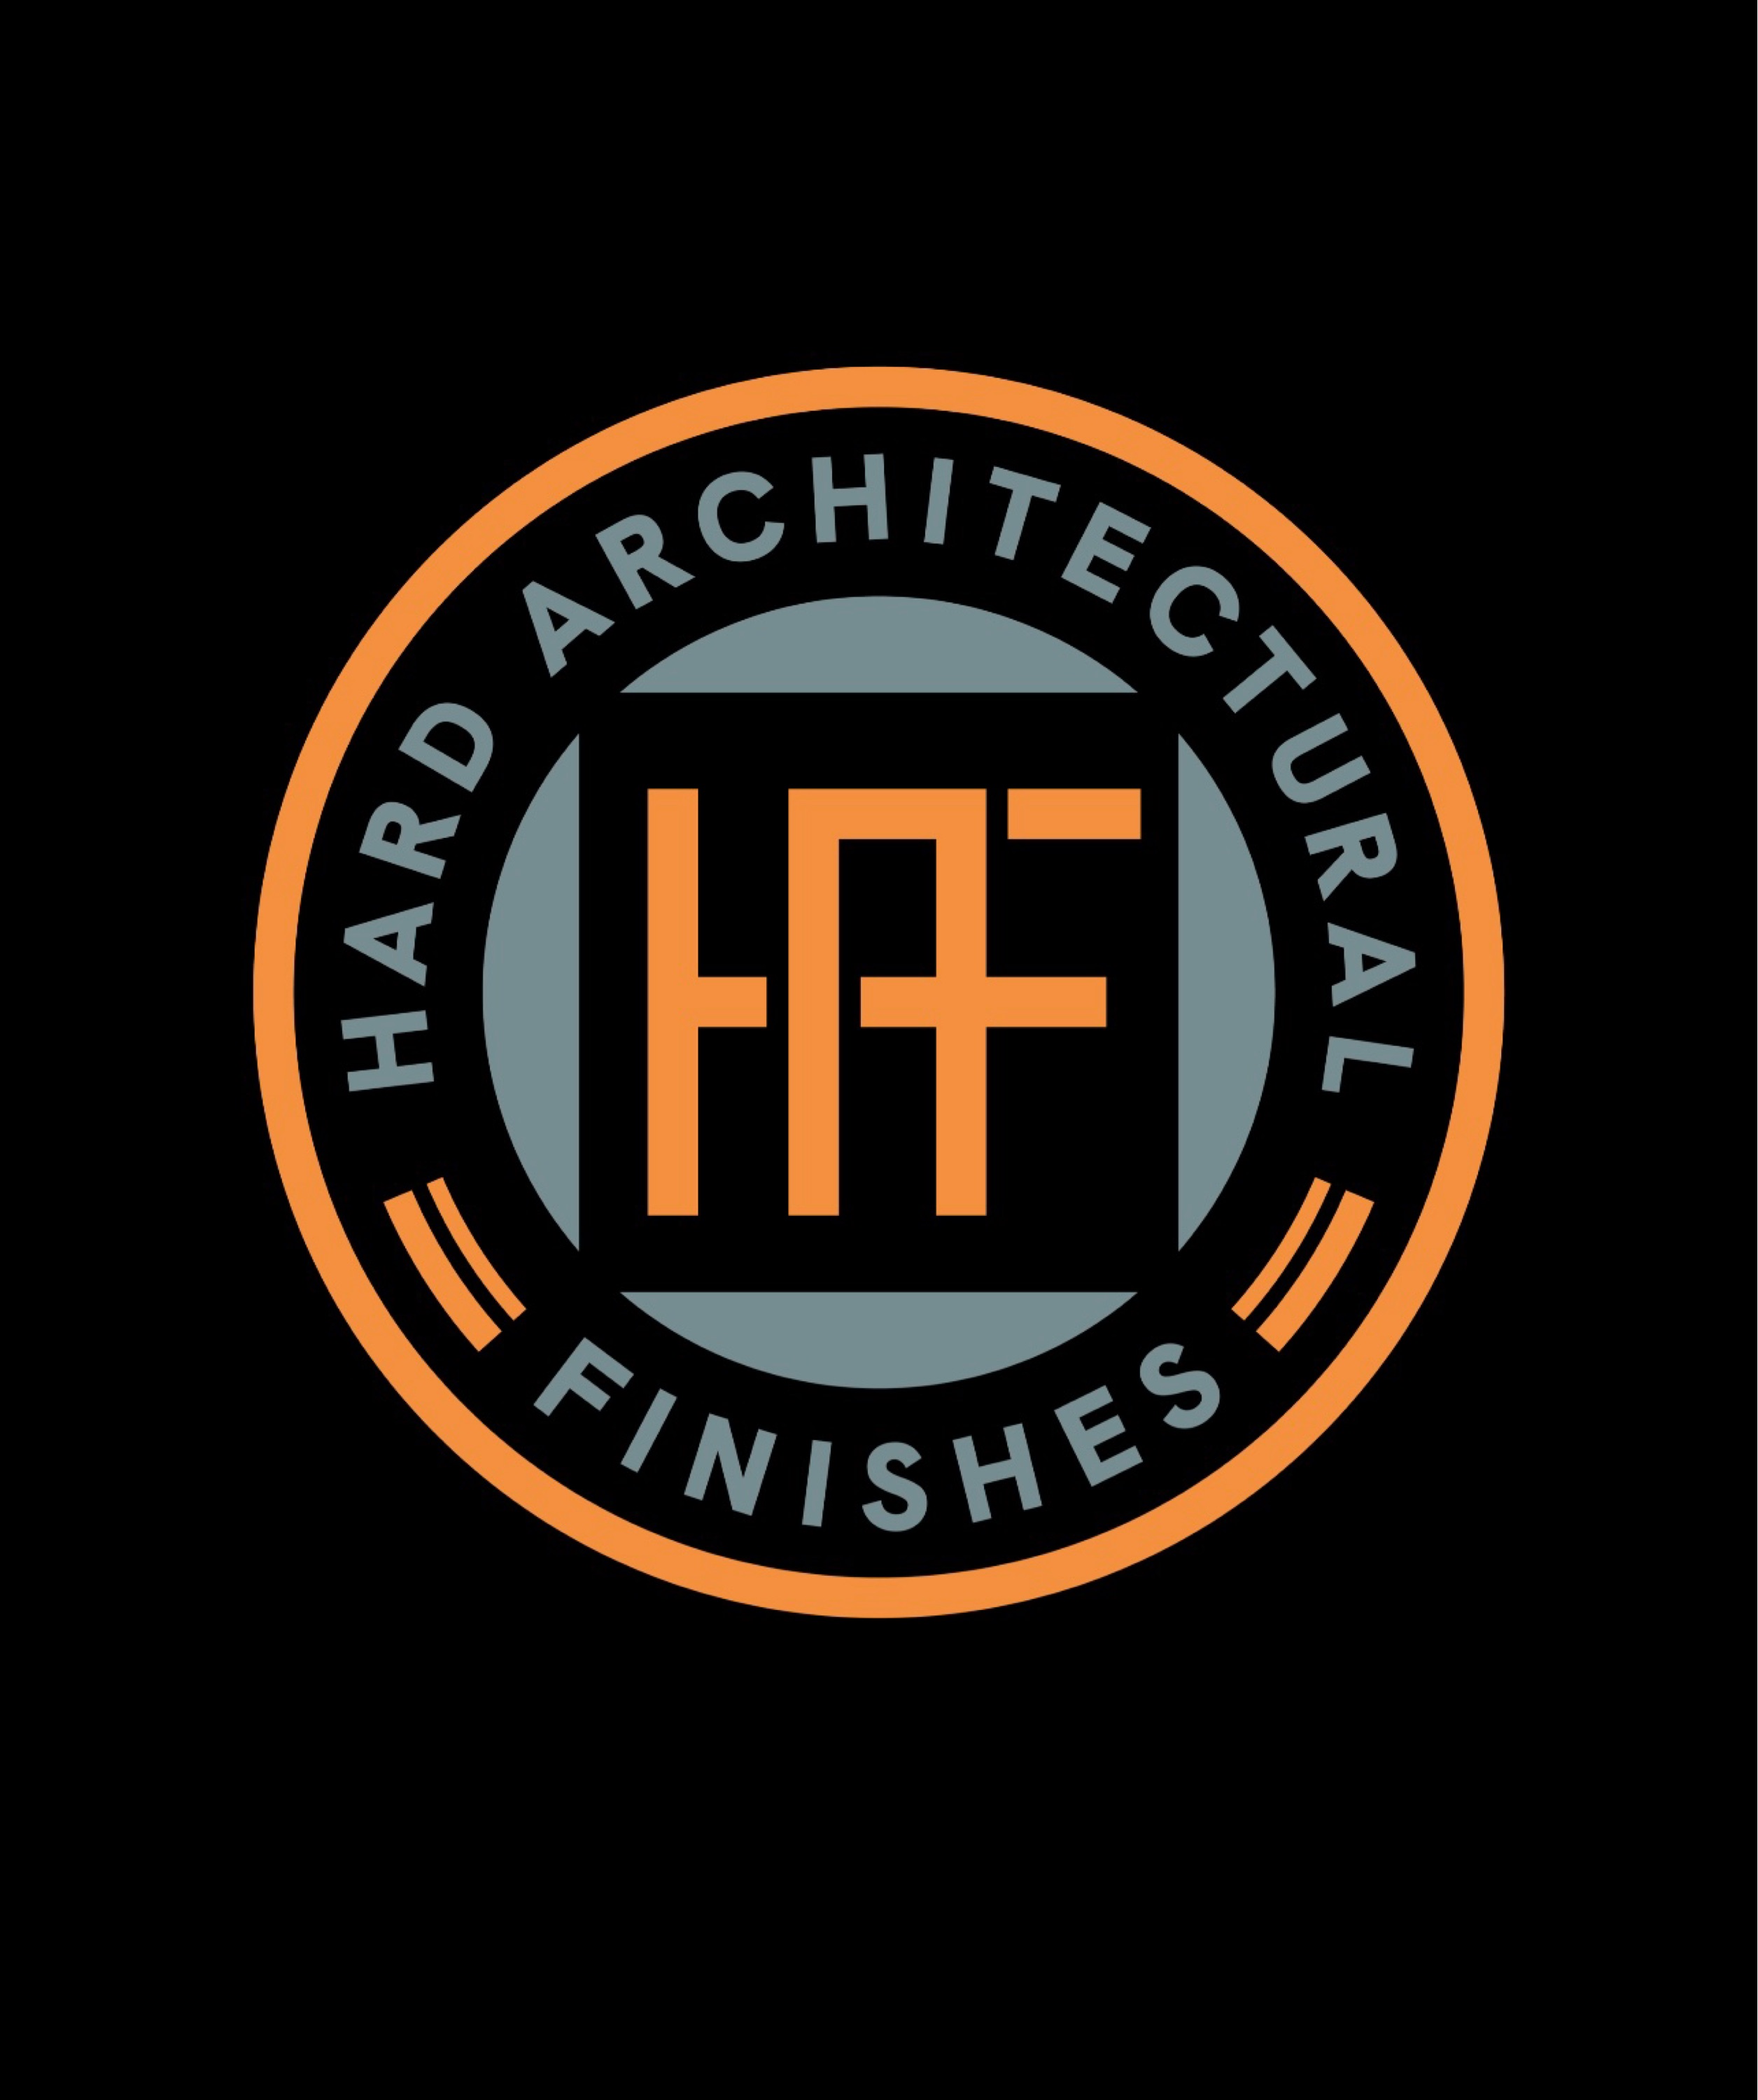 Hard Architectural Finishes Logo